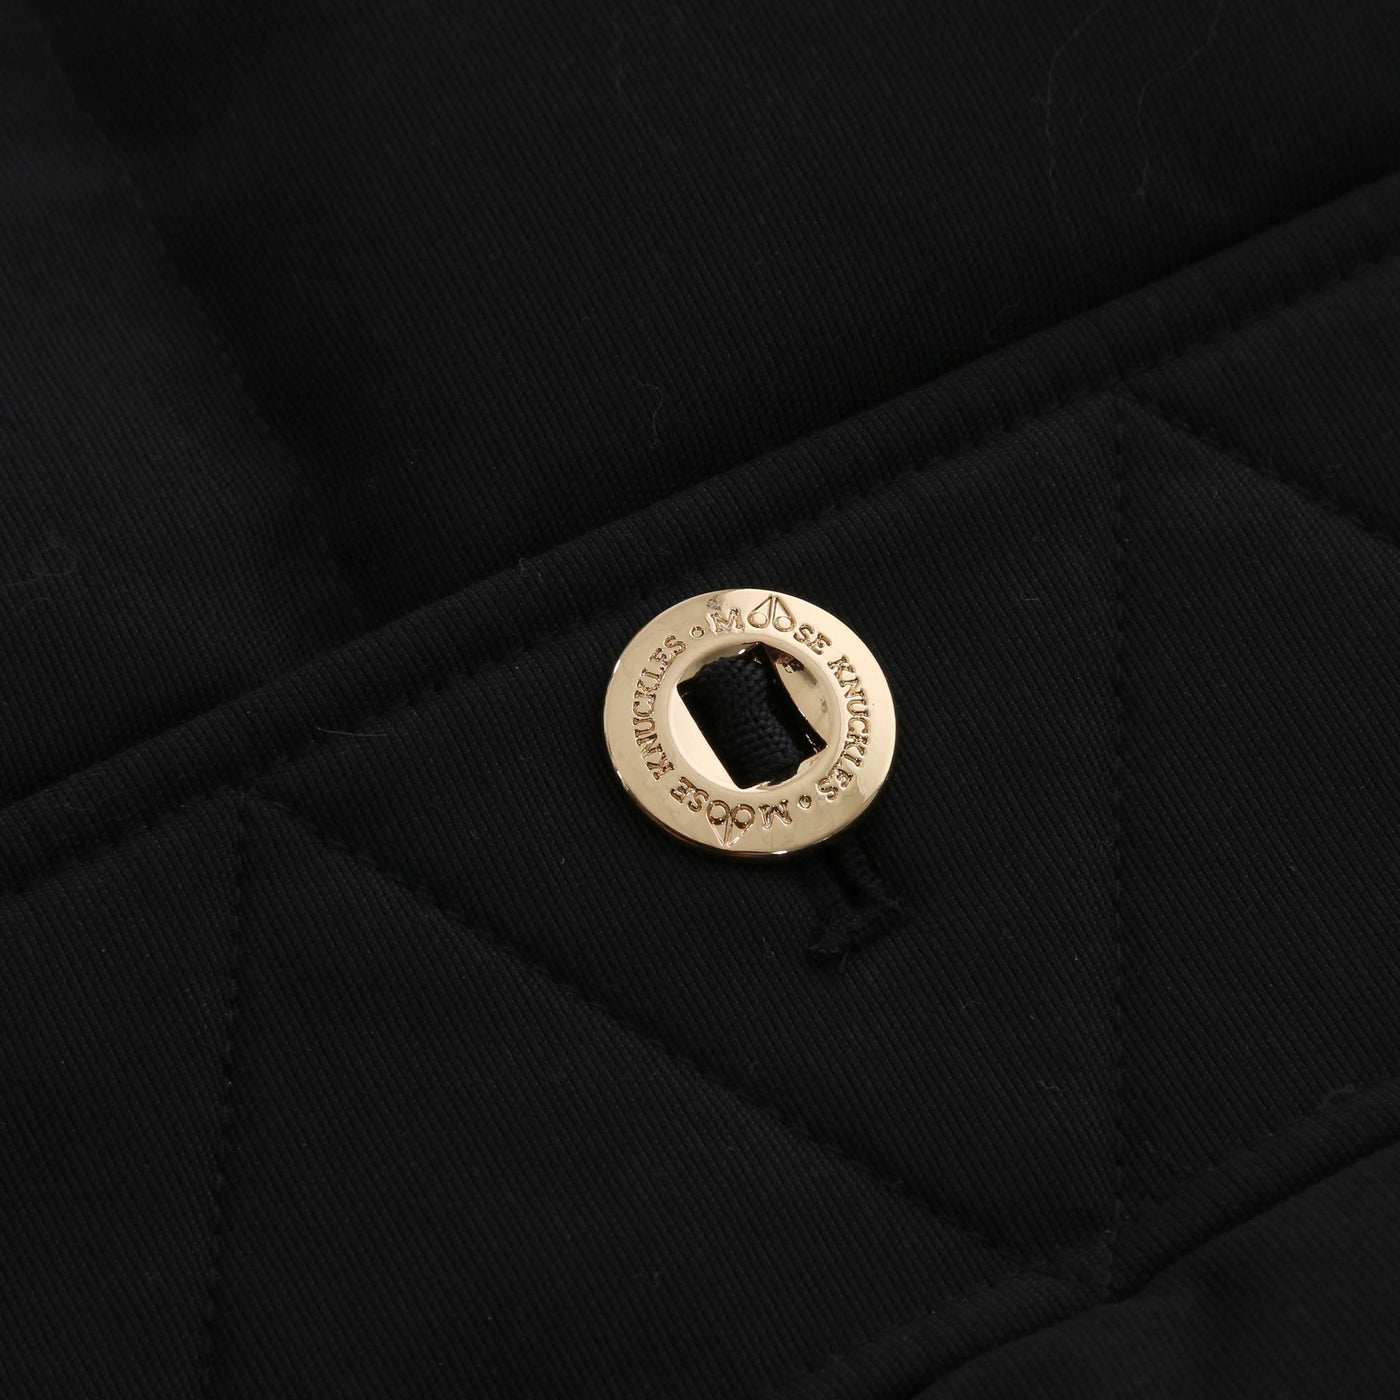 Moose Knuckles 3Q Gold Jacket in Neoshear Black button